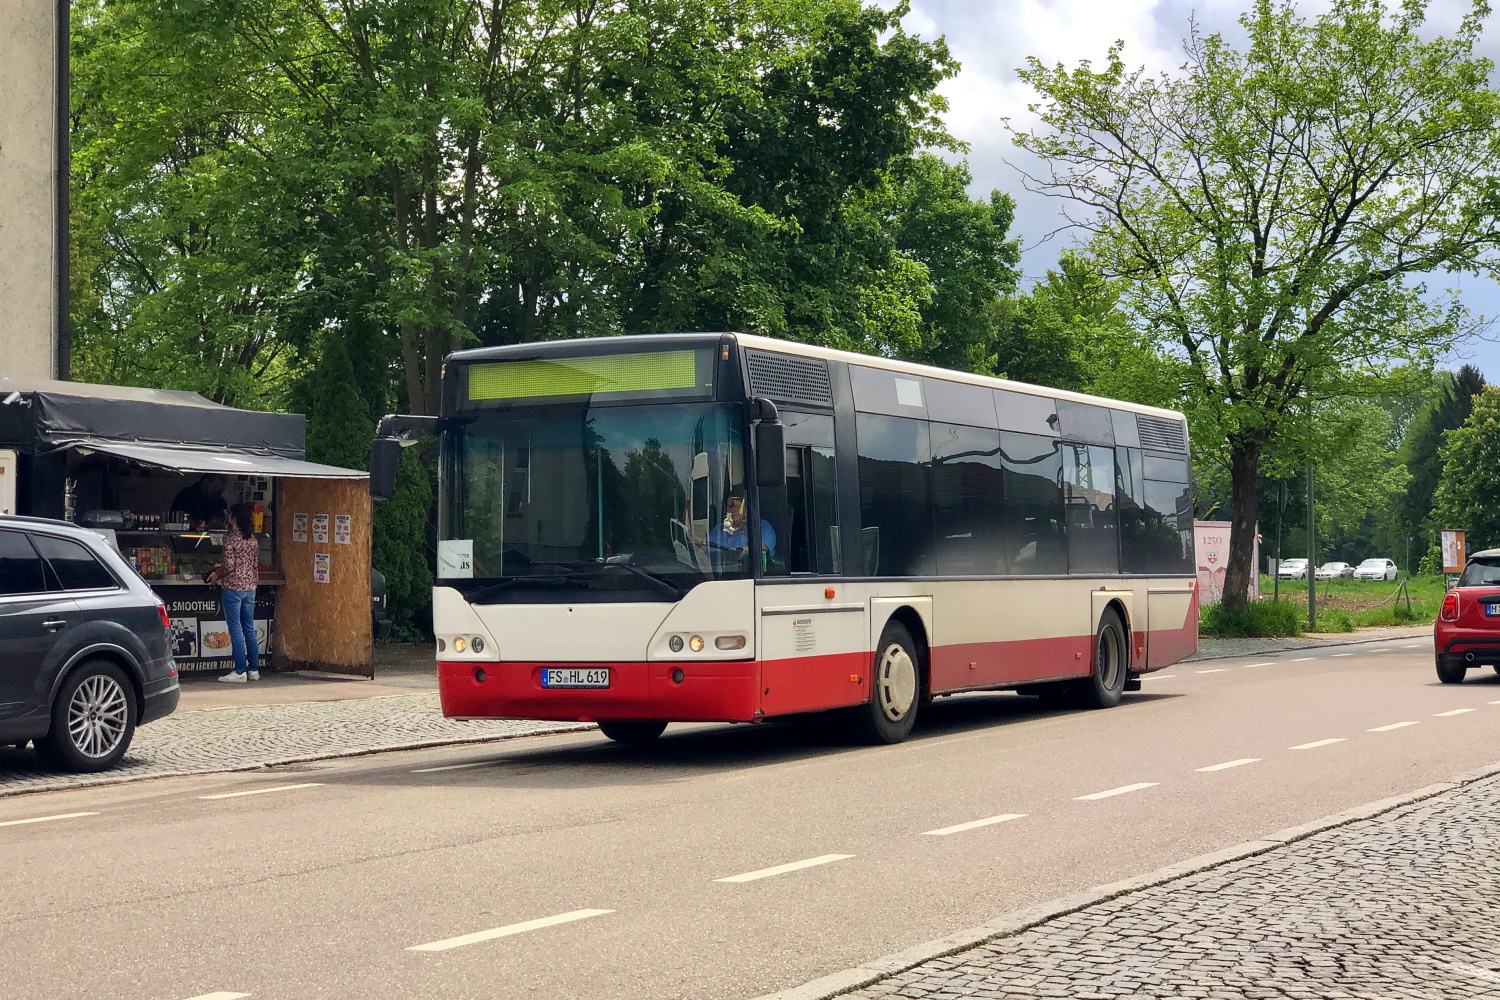 Freising, Neoplan N4411 Centroliner No. FS-HL 619